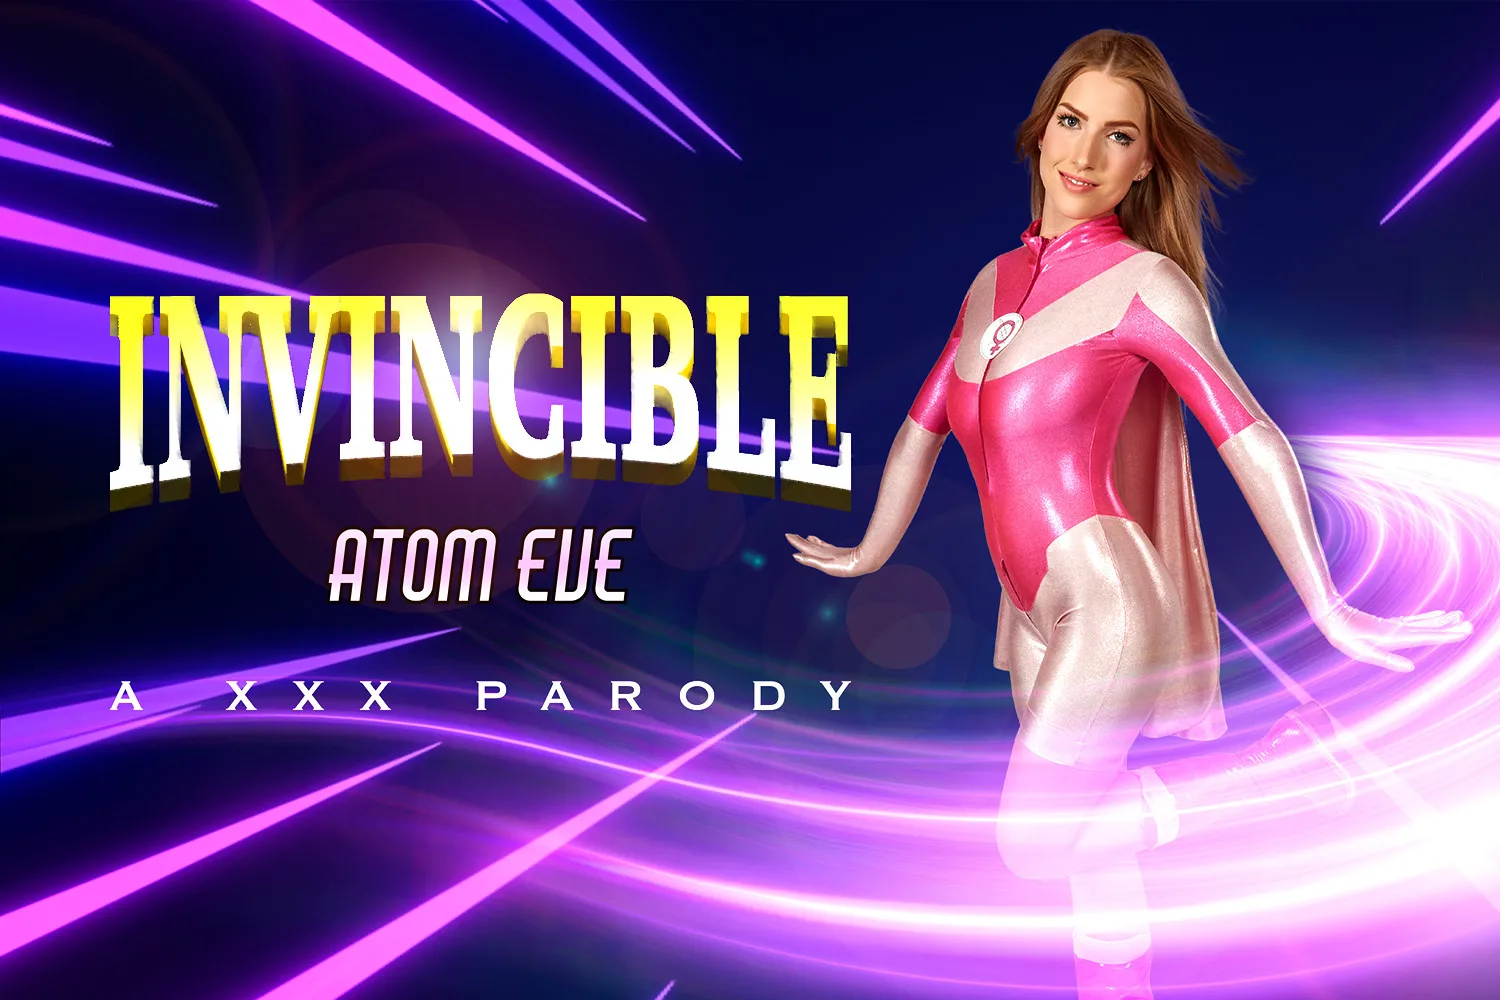 [2022-10-06] Invincible: Atom Eve A XXX Parody - VRCosplayX